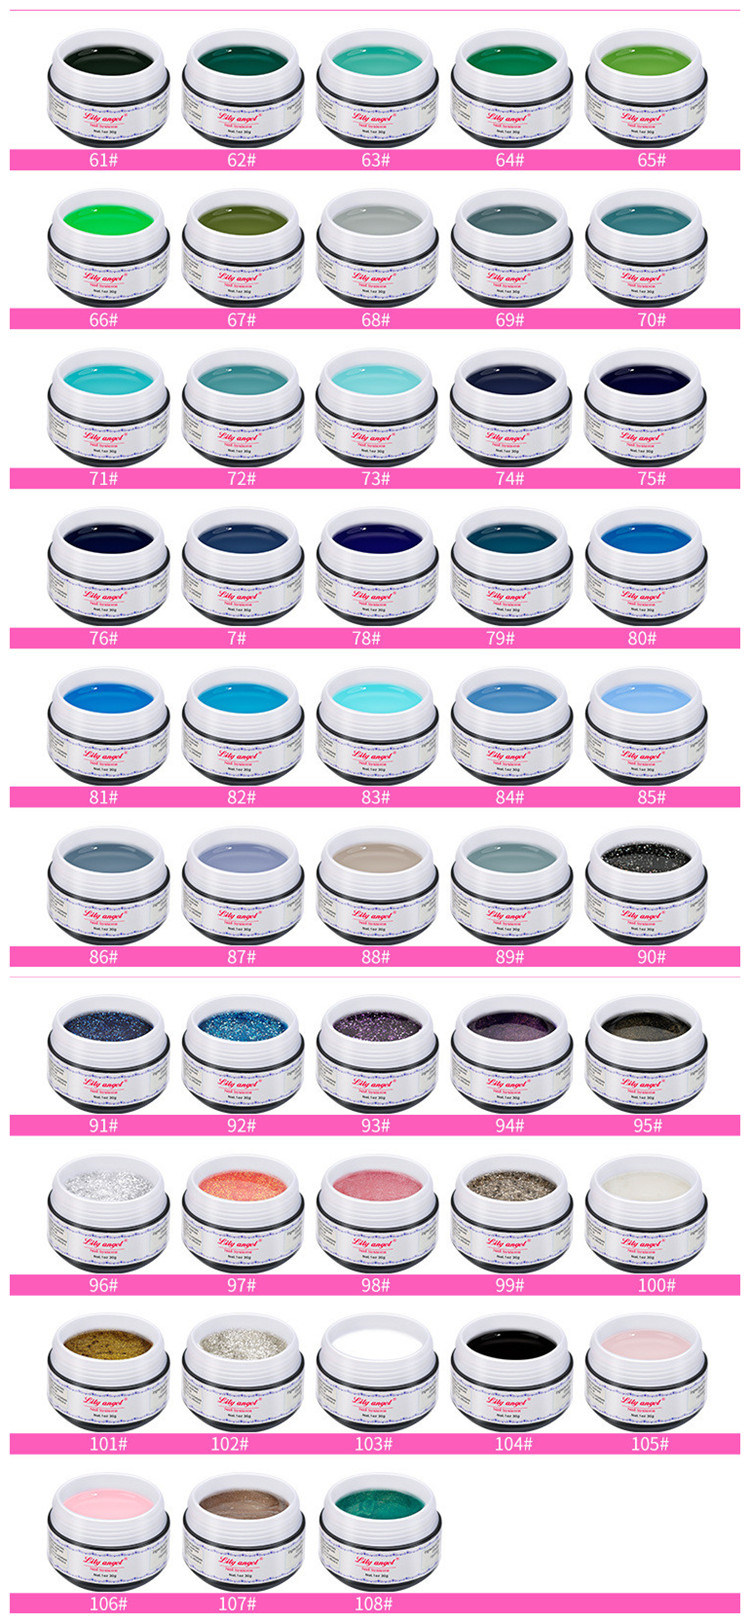 Wholesale Long Lasting Peel off 30g Nail Art Color UV LED Curing Lighting Gels Polish Glue